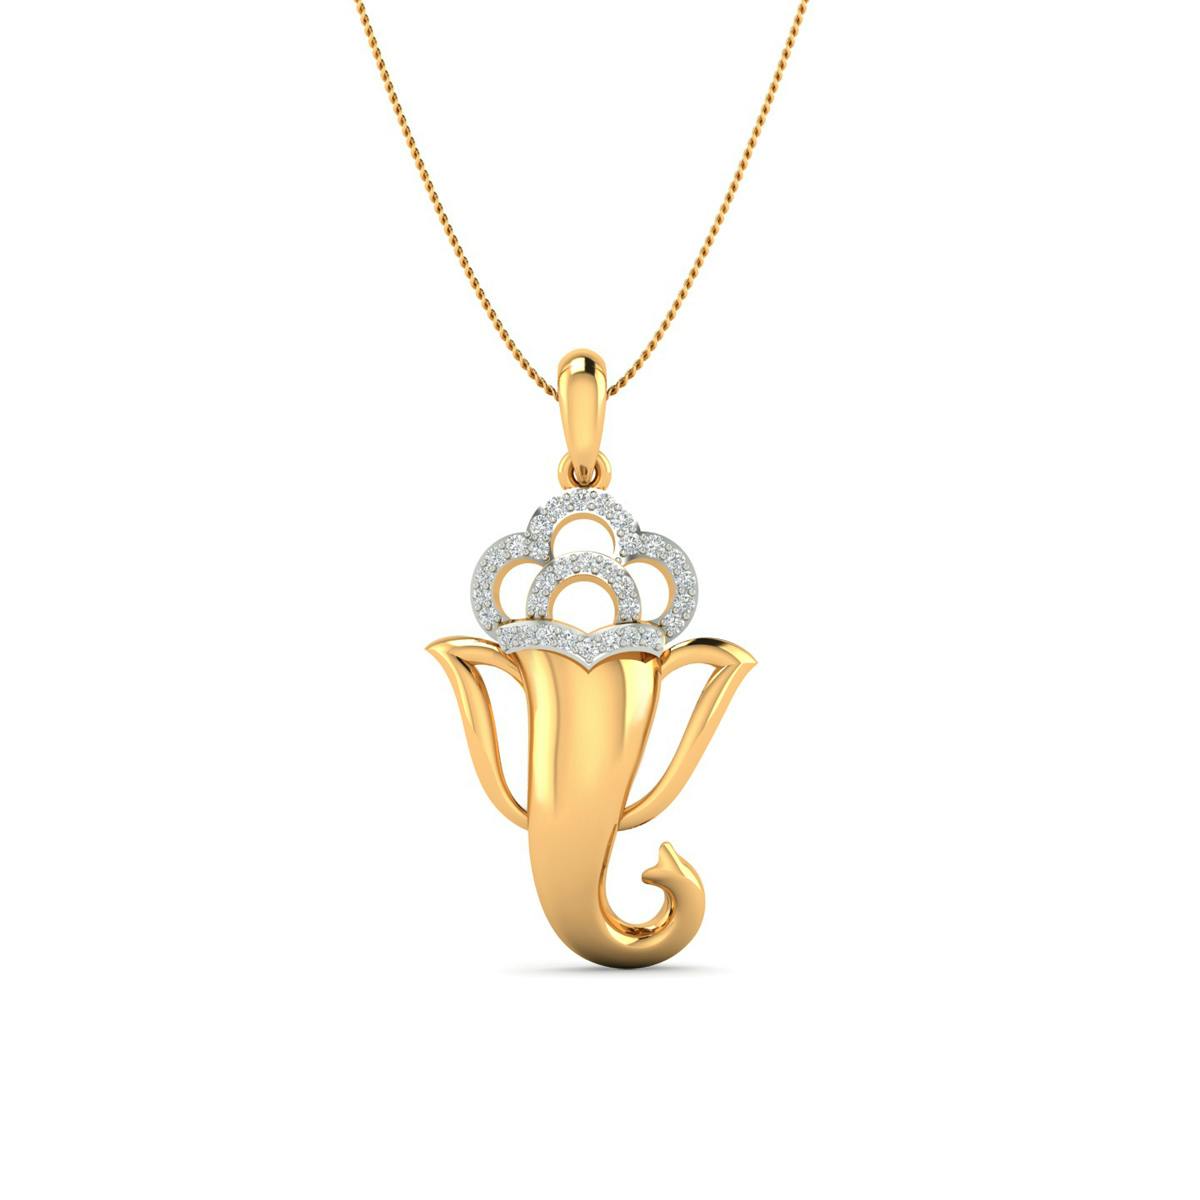 Avighna Ganesh diamond pendant (Without Chain)